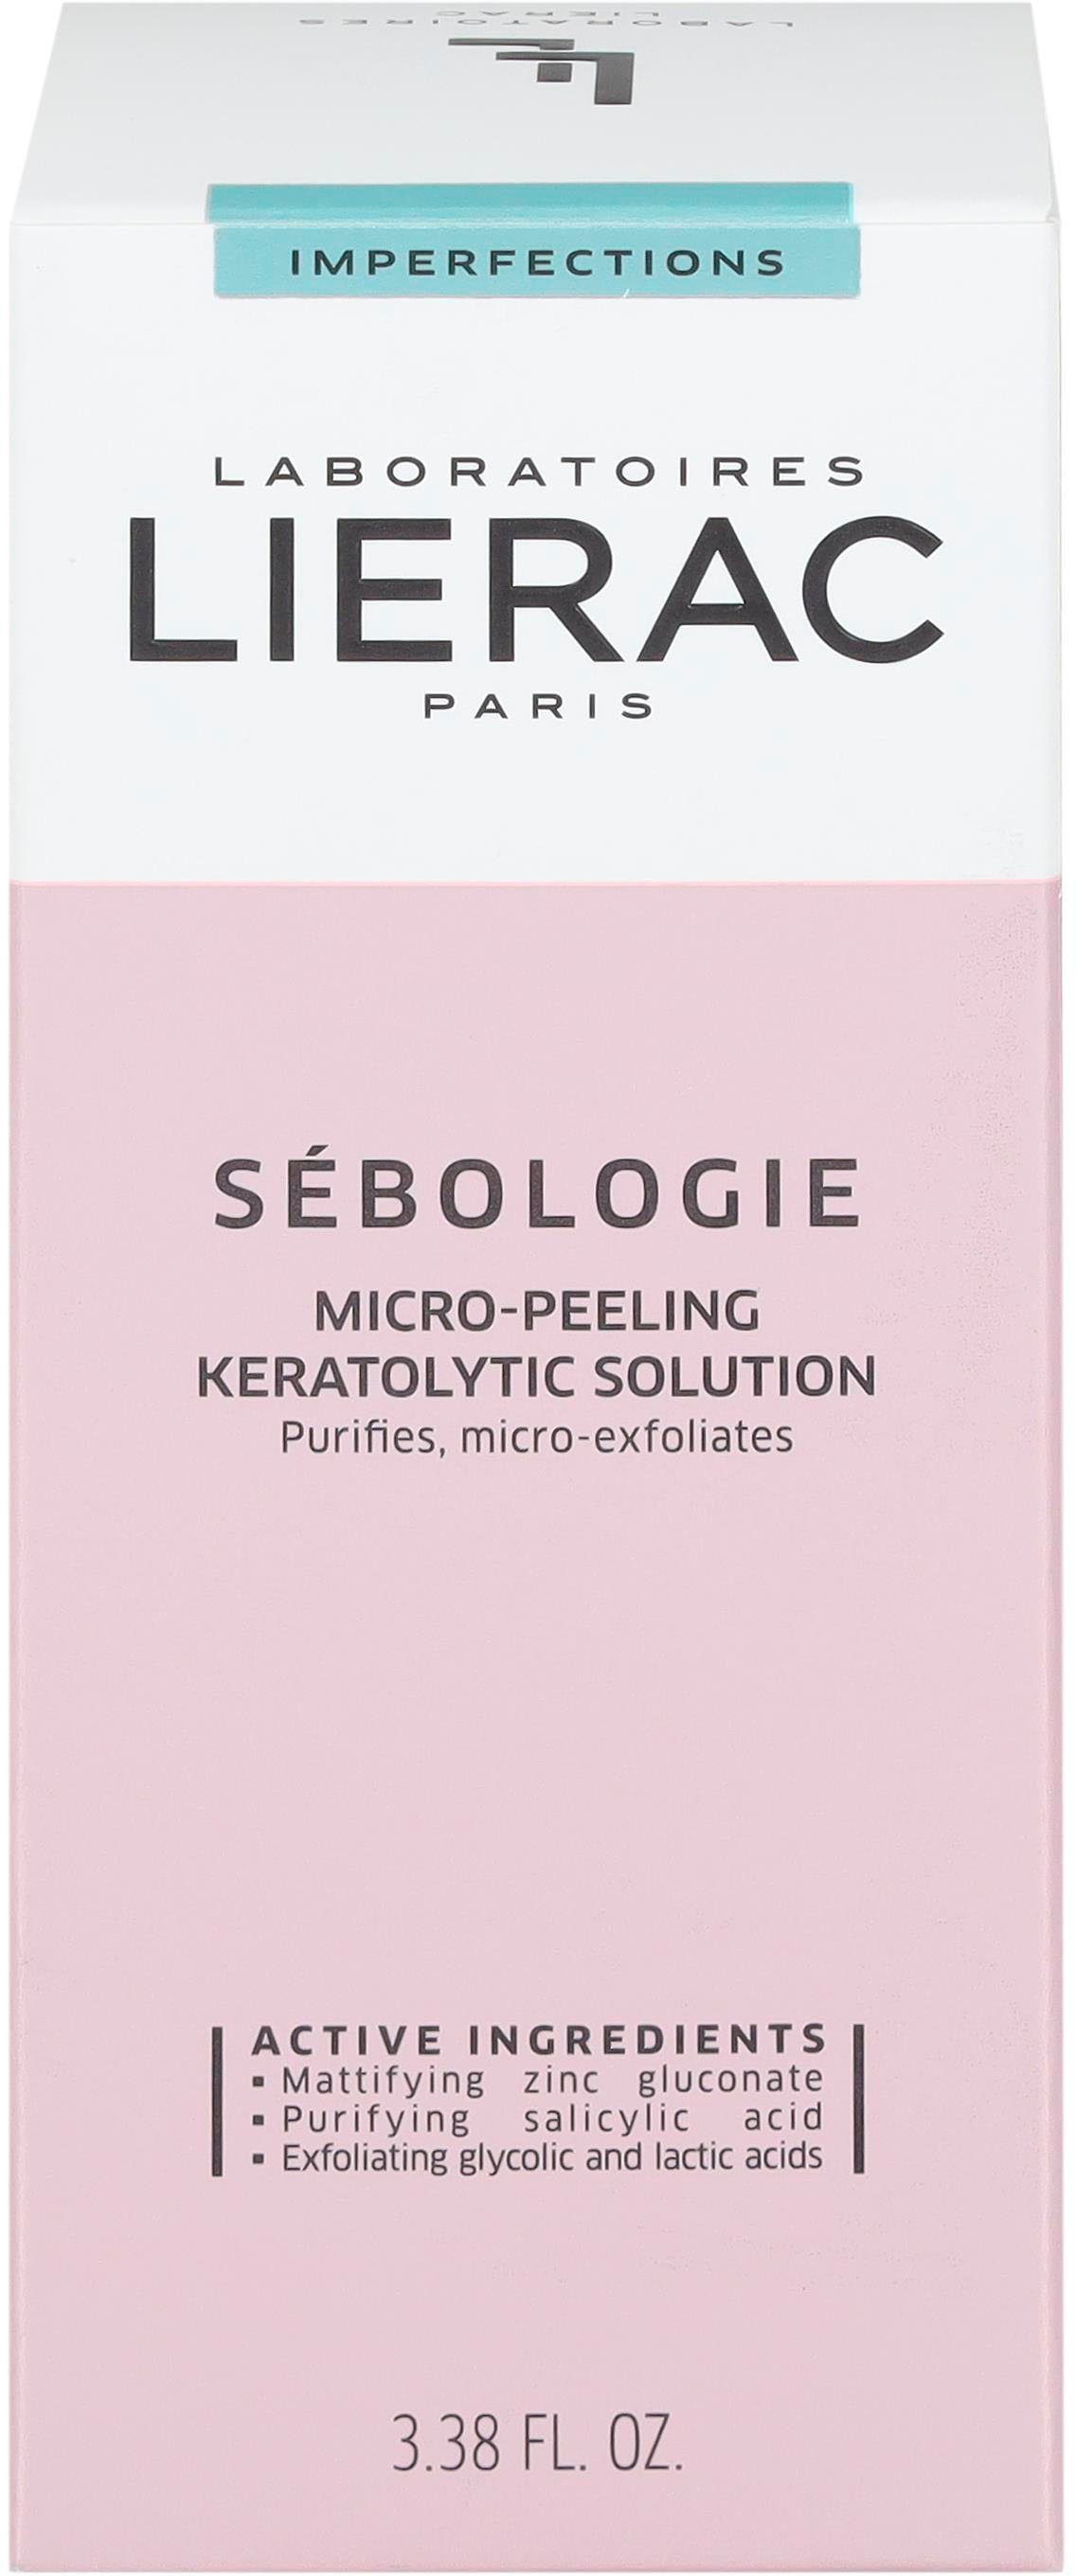 LIERAC Gesichts-Reinigungsfluid Sebologie Solution Keratolytique Micro-Peeling